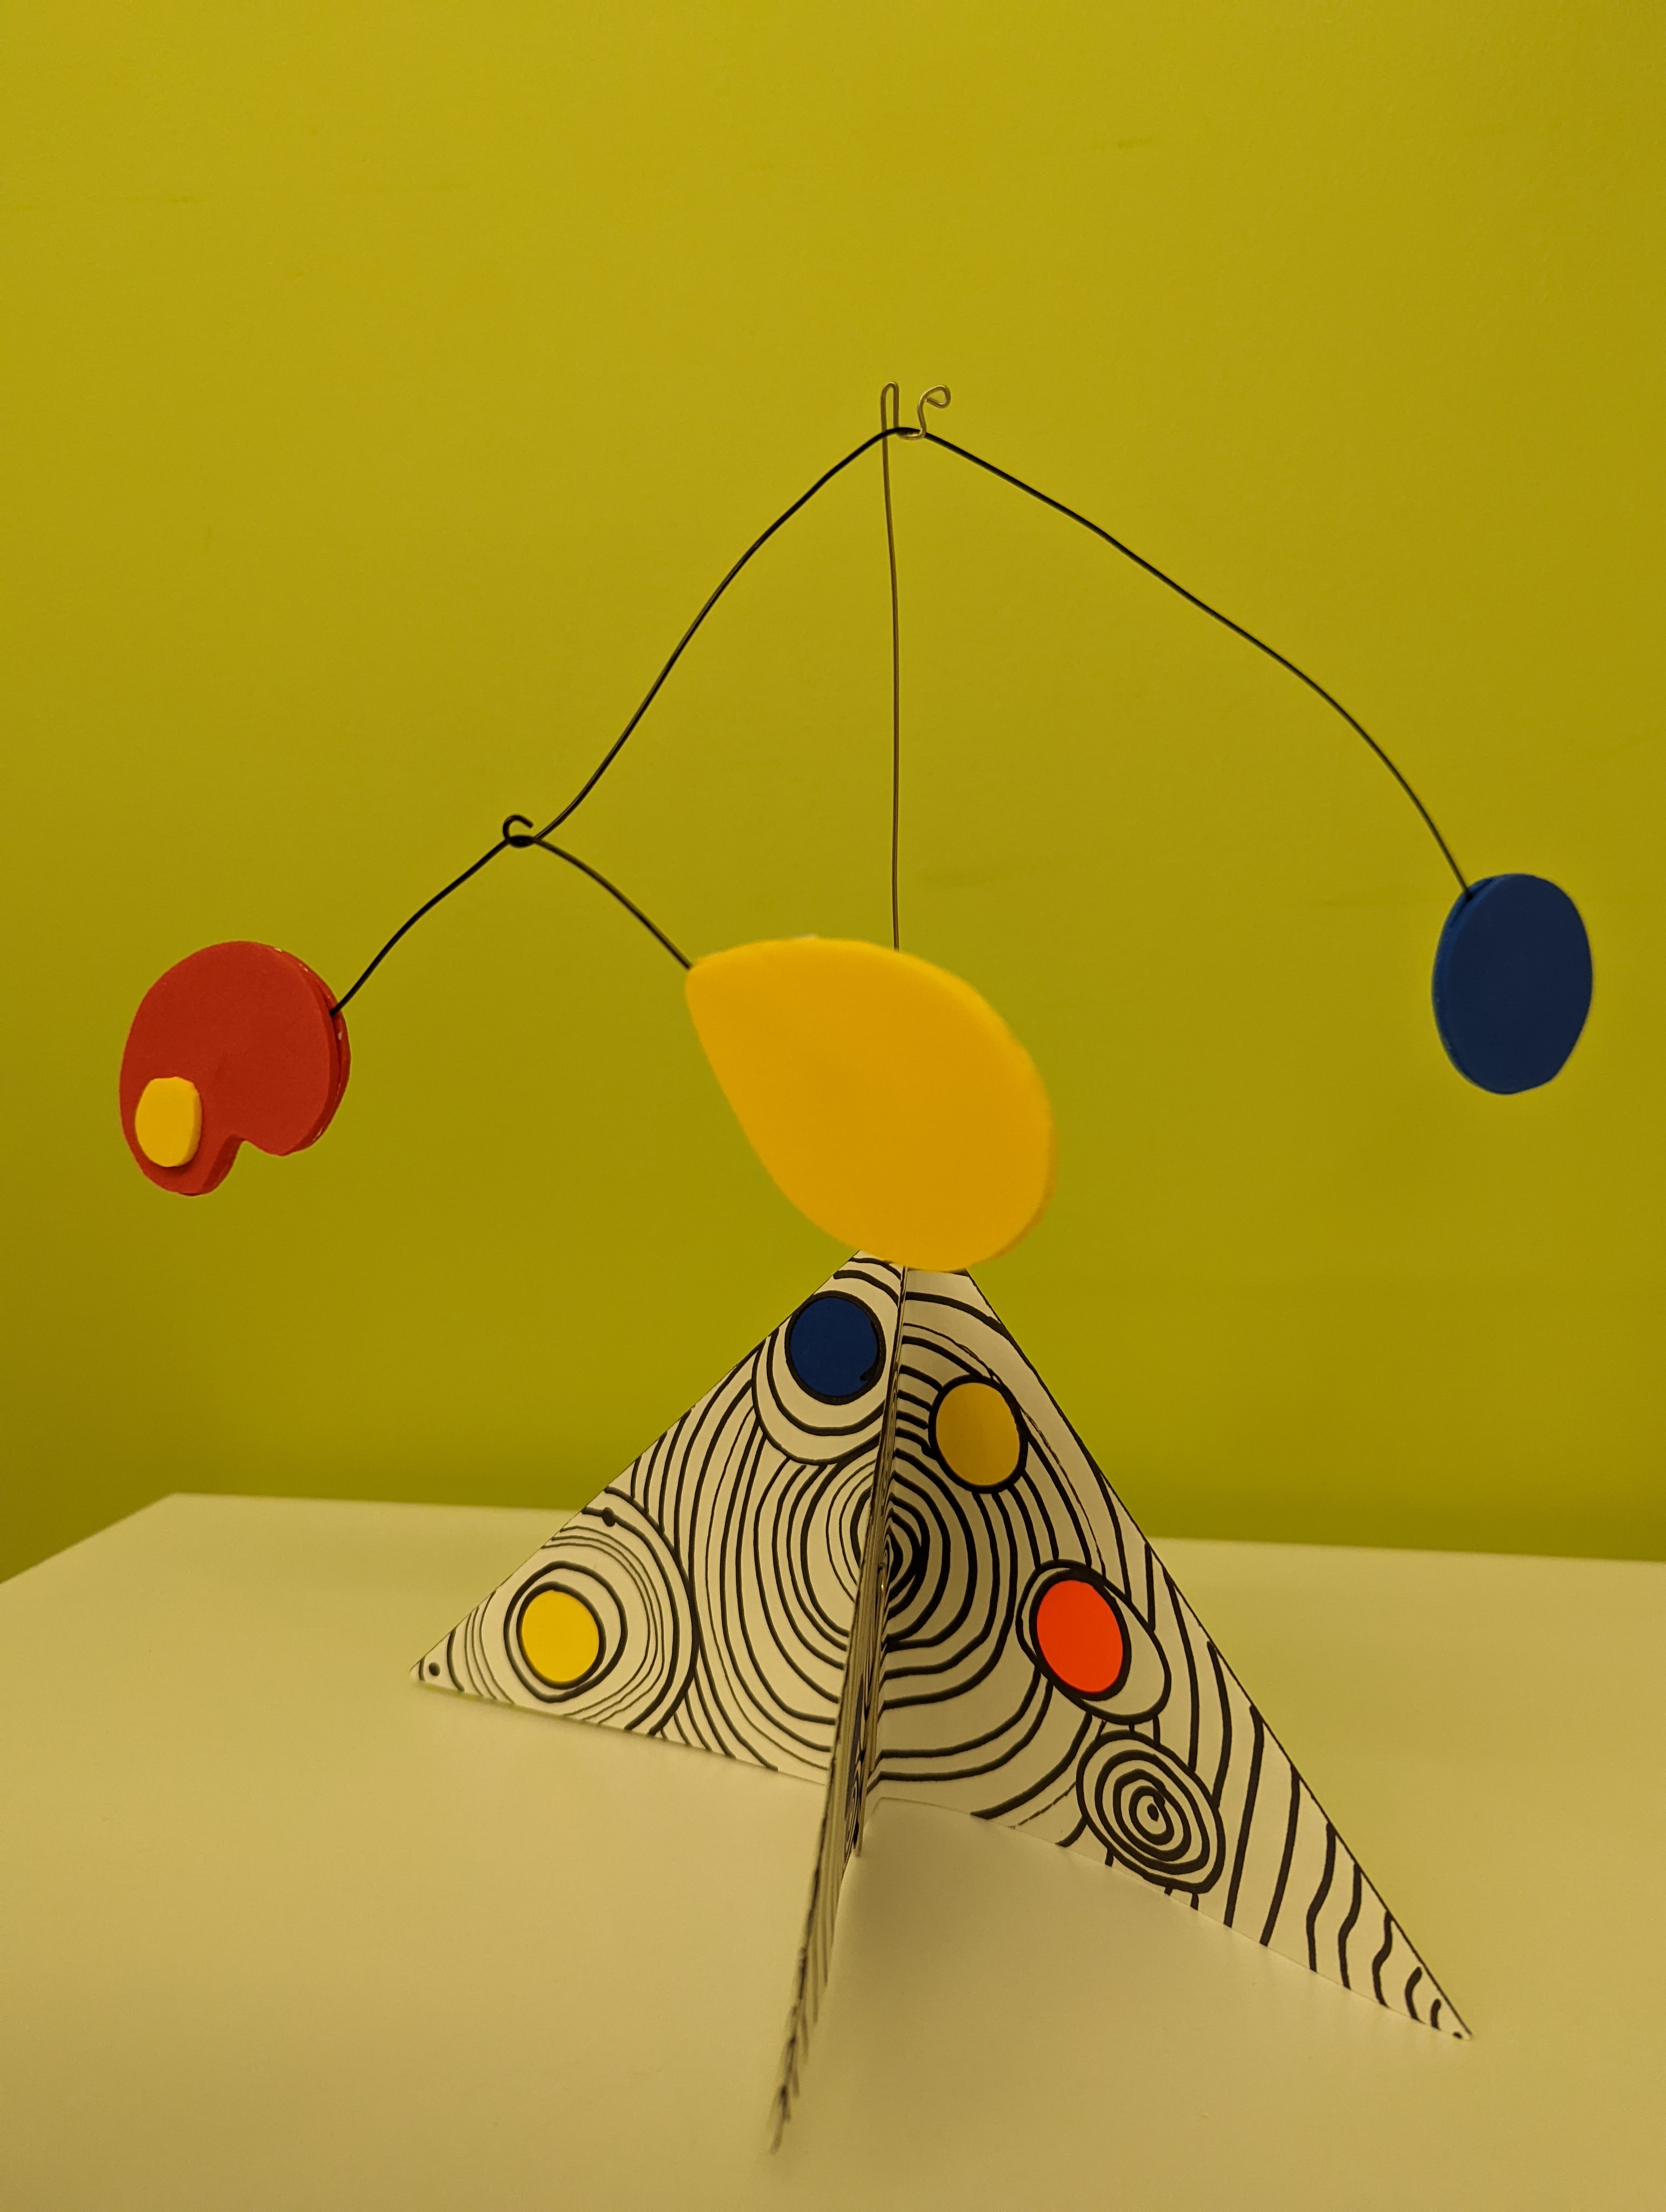 Calder inspired sculpture